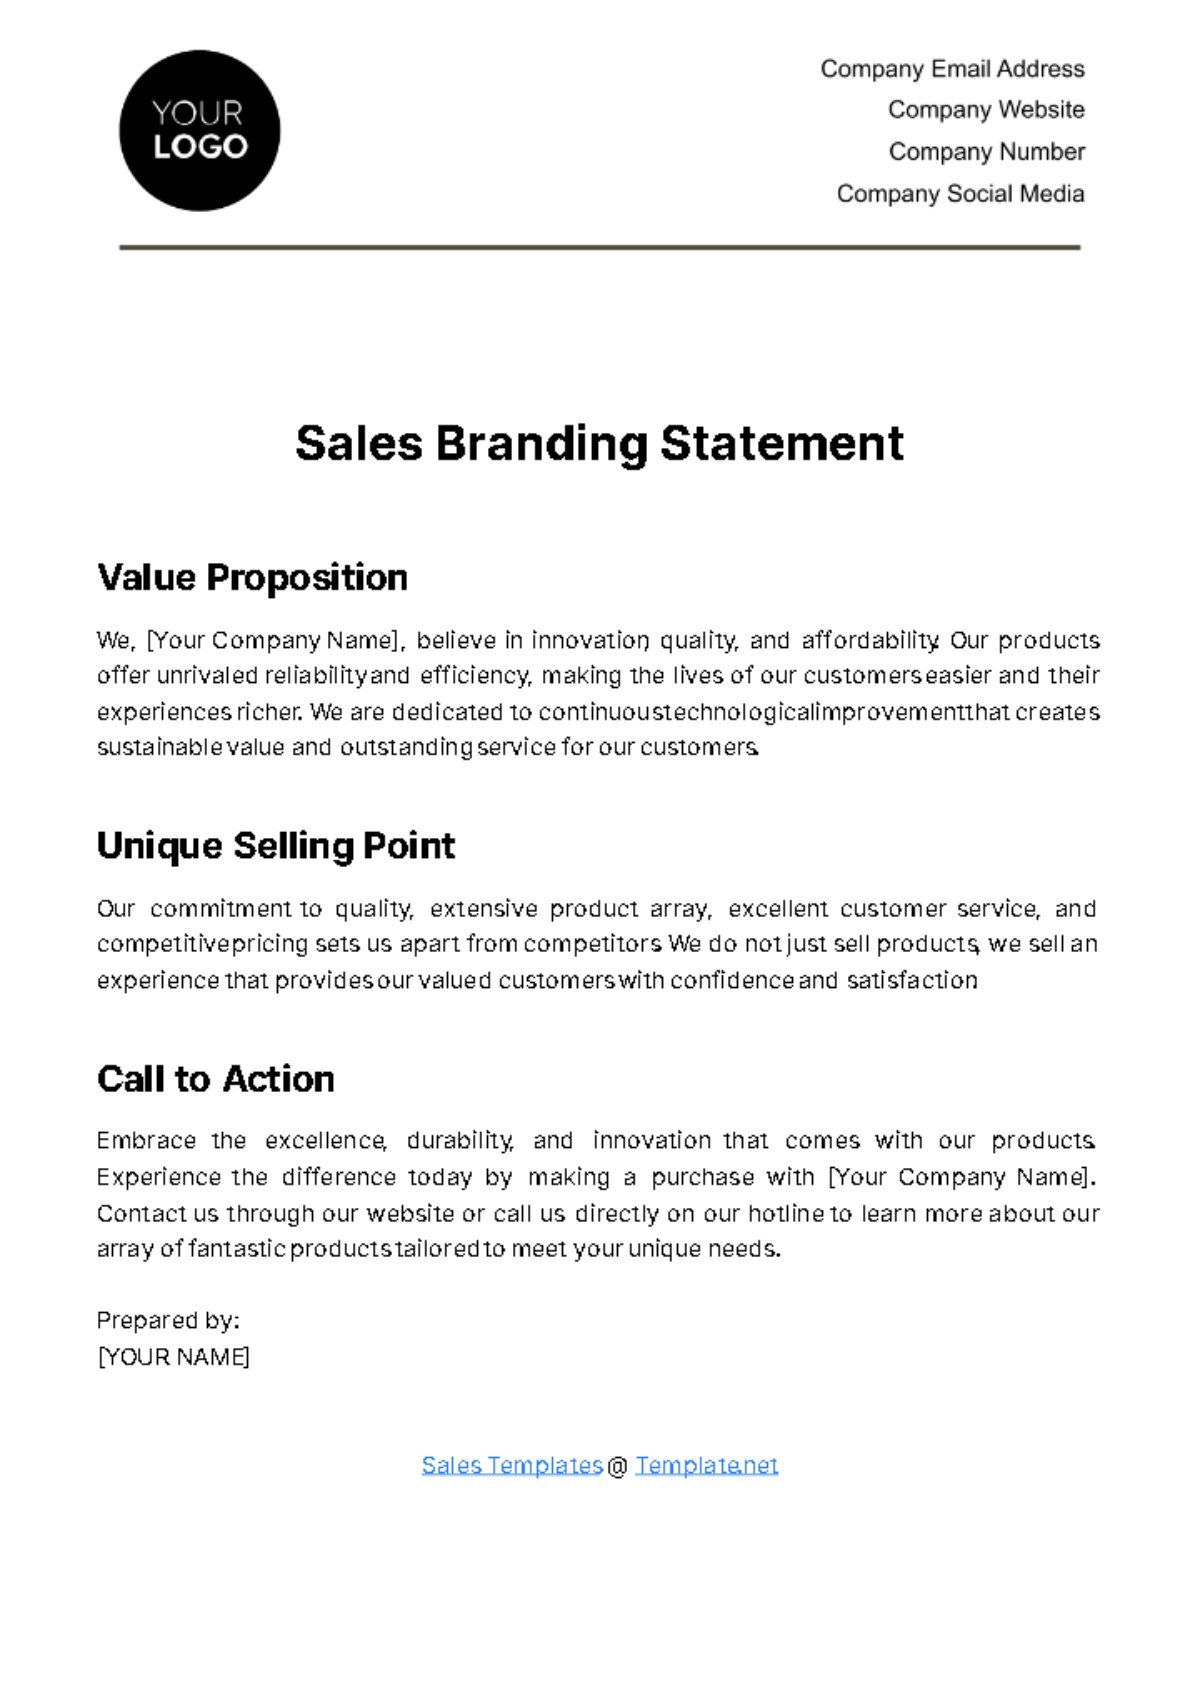 Free Sales Branding Statement Template